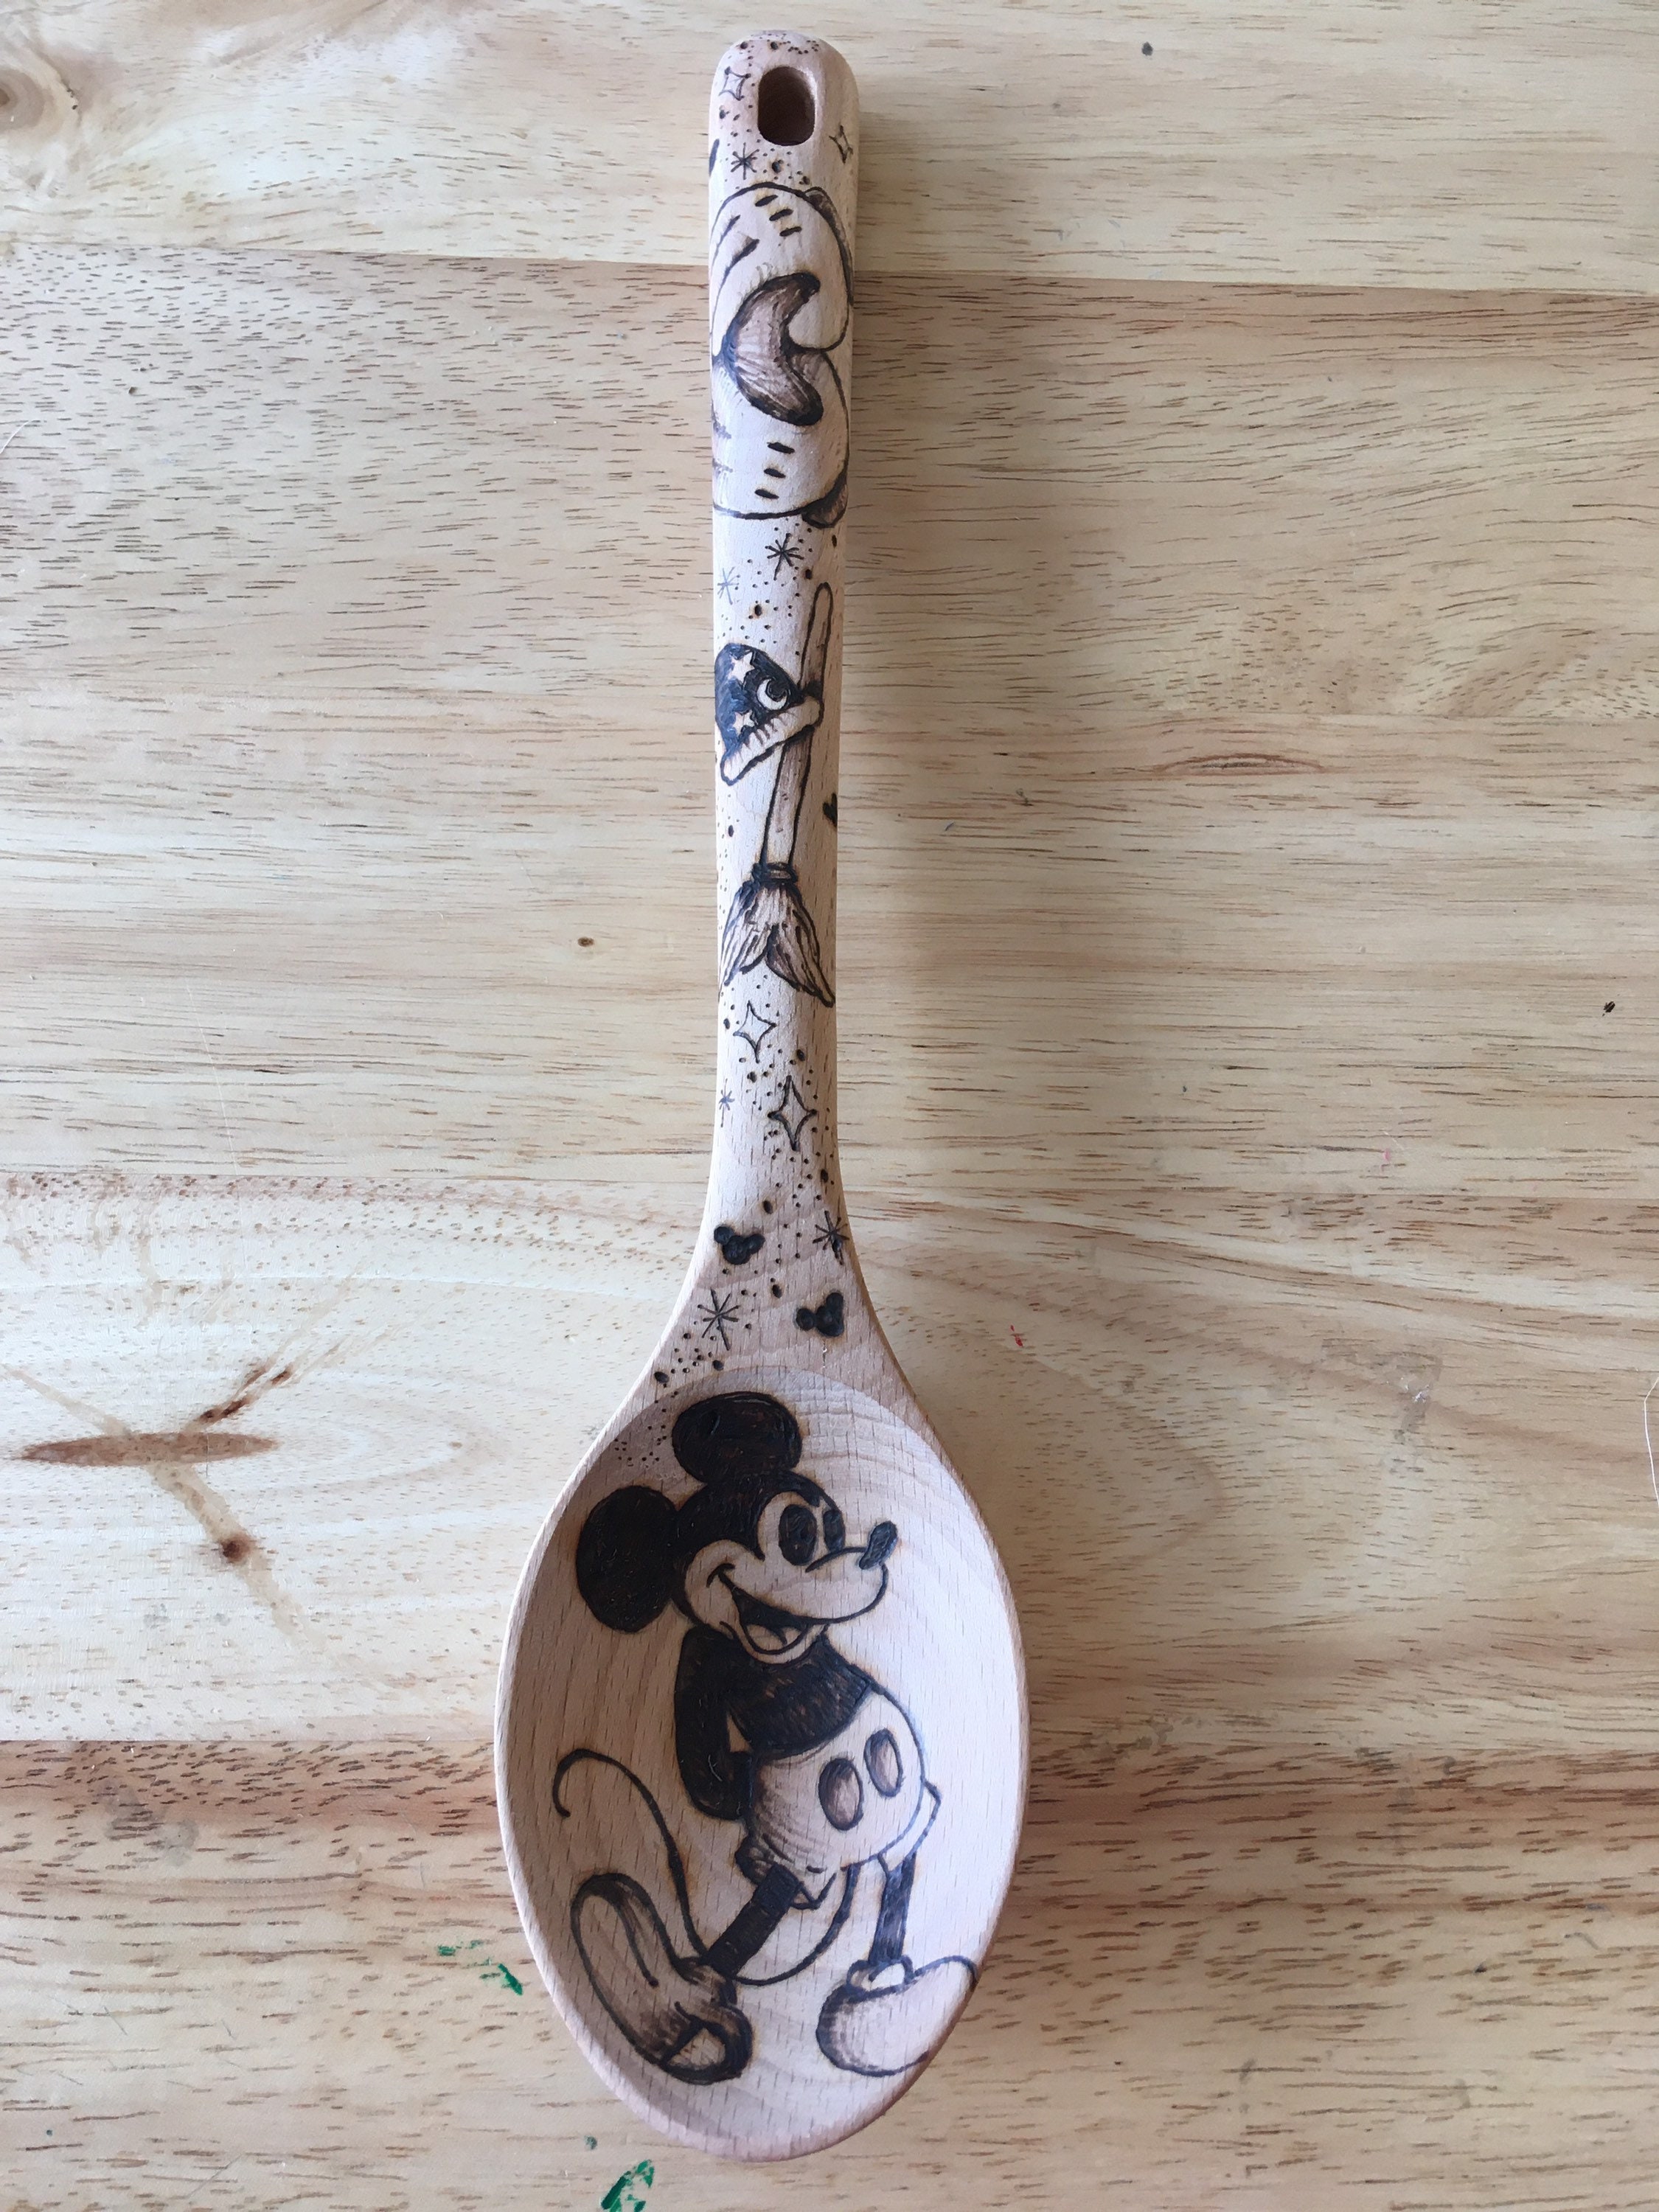 Custom Disney Character Spoon